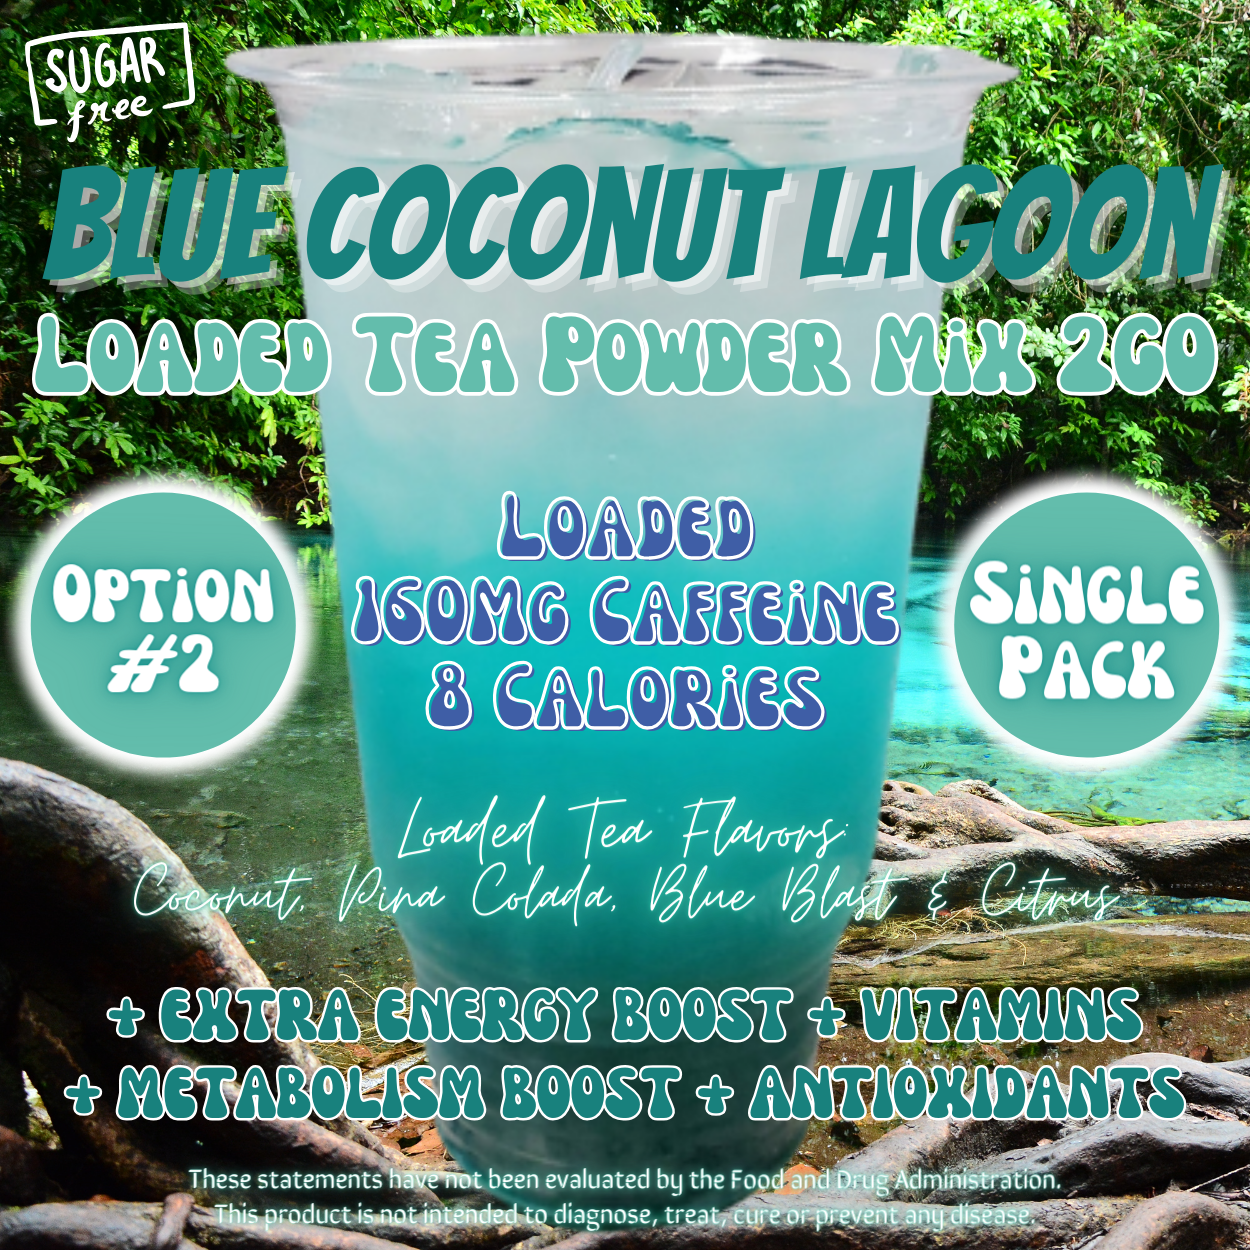 Blue Coconut Lagoon: Loaded Tea Powder Mix 2GO Packets